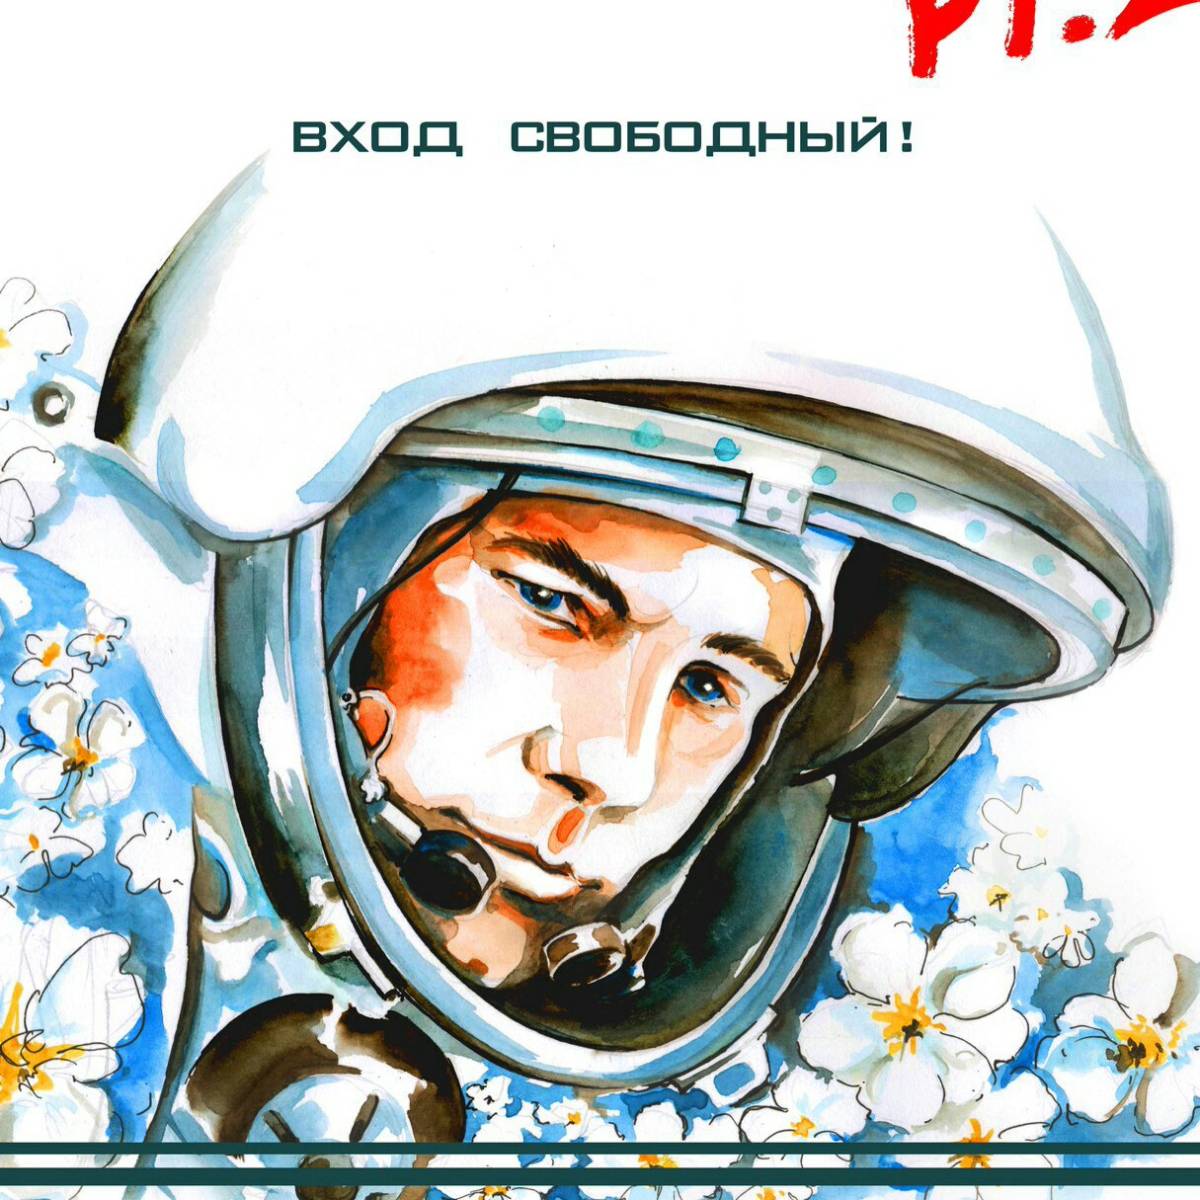 Гагарин космонавт. Звездный сын земли Гагарин. Гагарин картинки день космонавтики